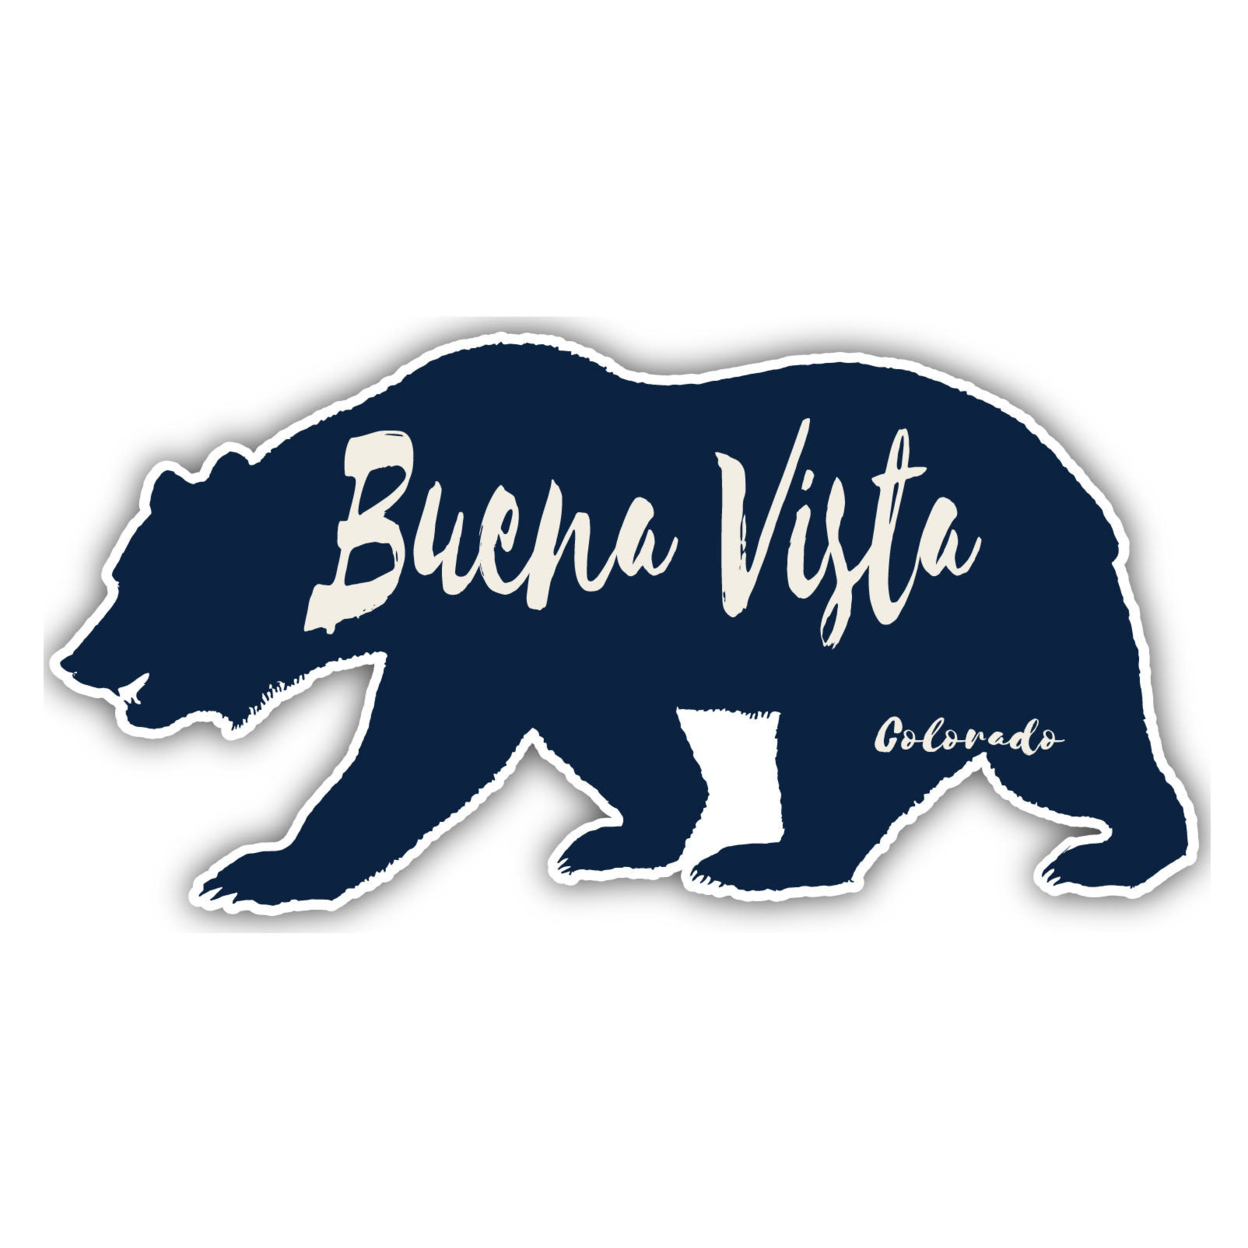 Buena Vista Colorado Souvenir Decorative Stickers (Choose Theme And Size) - 4-Pack, 8-Inch, Bear